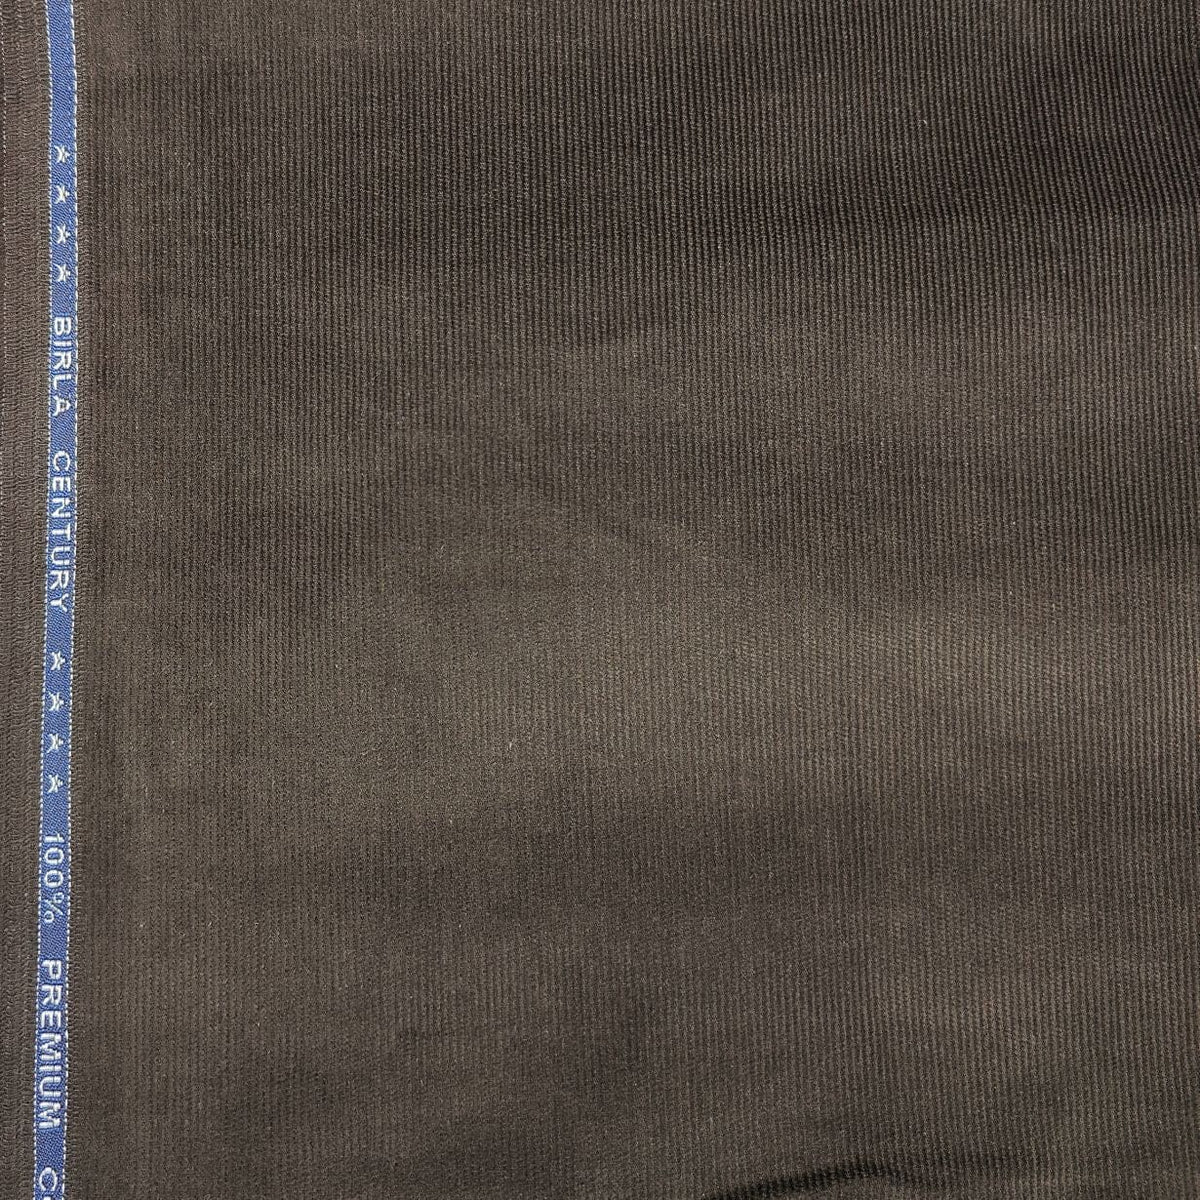 Birla Century Men's Cotton Corduroy Stretchable Trouser Fabric (Colour Dark Brown)